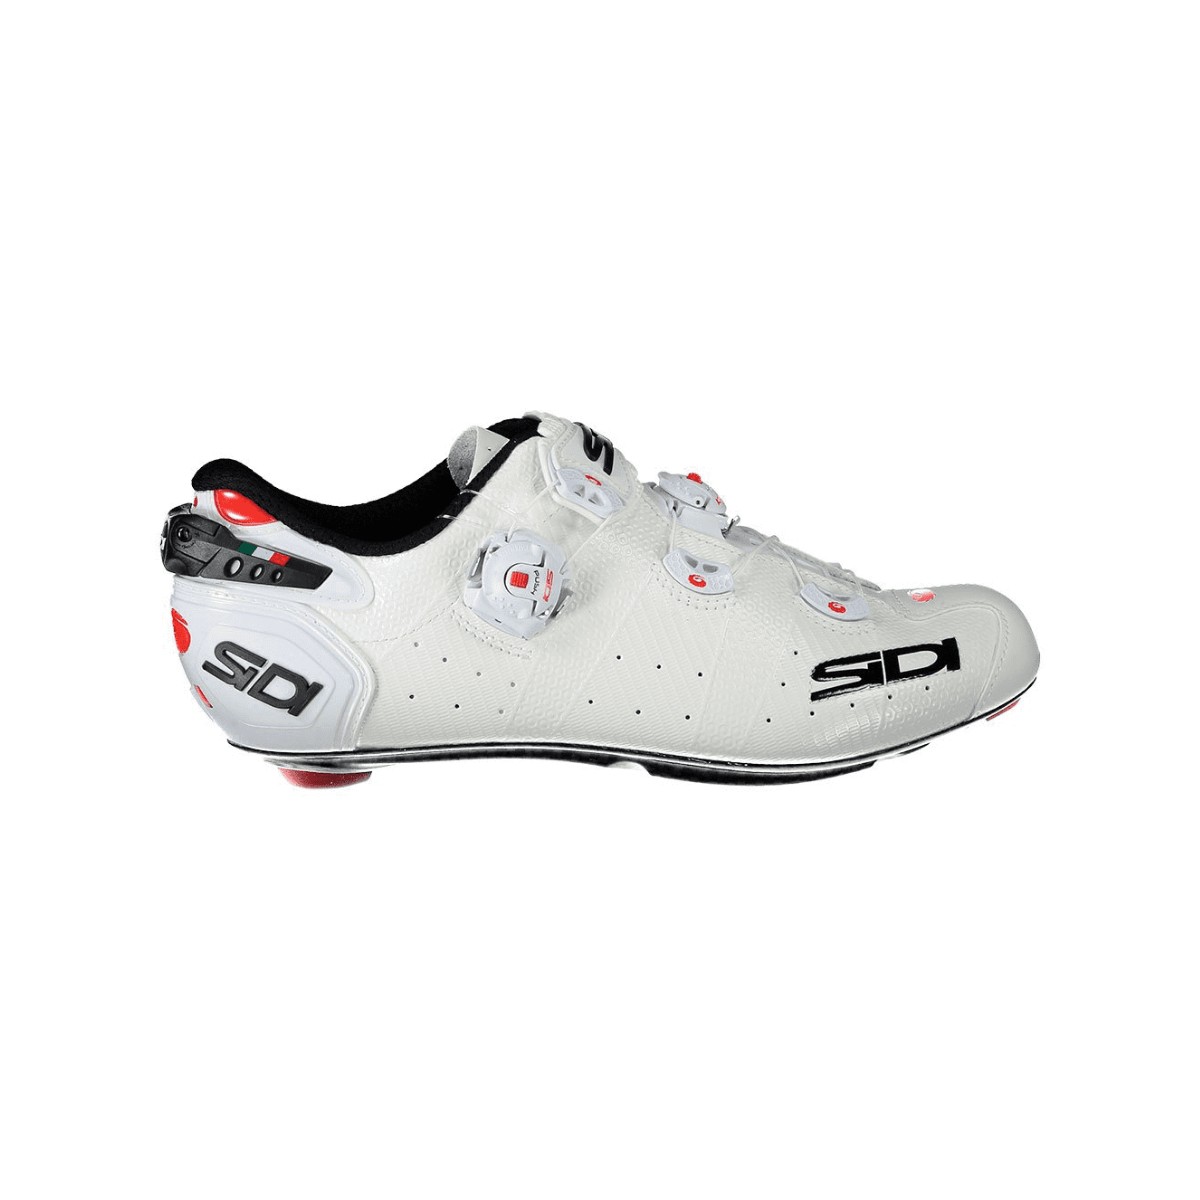 Sidi Wire 2 Carbon Cycling Shoes White, Size 43 - EUR